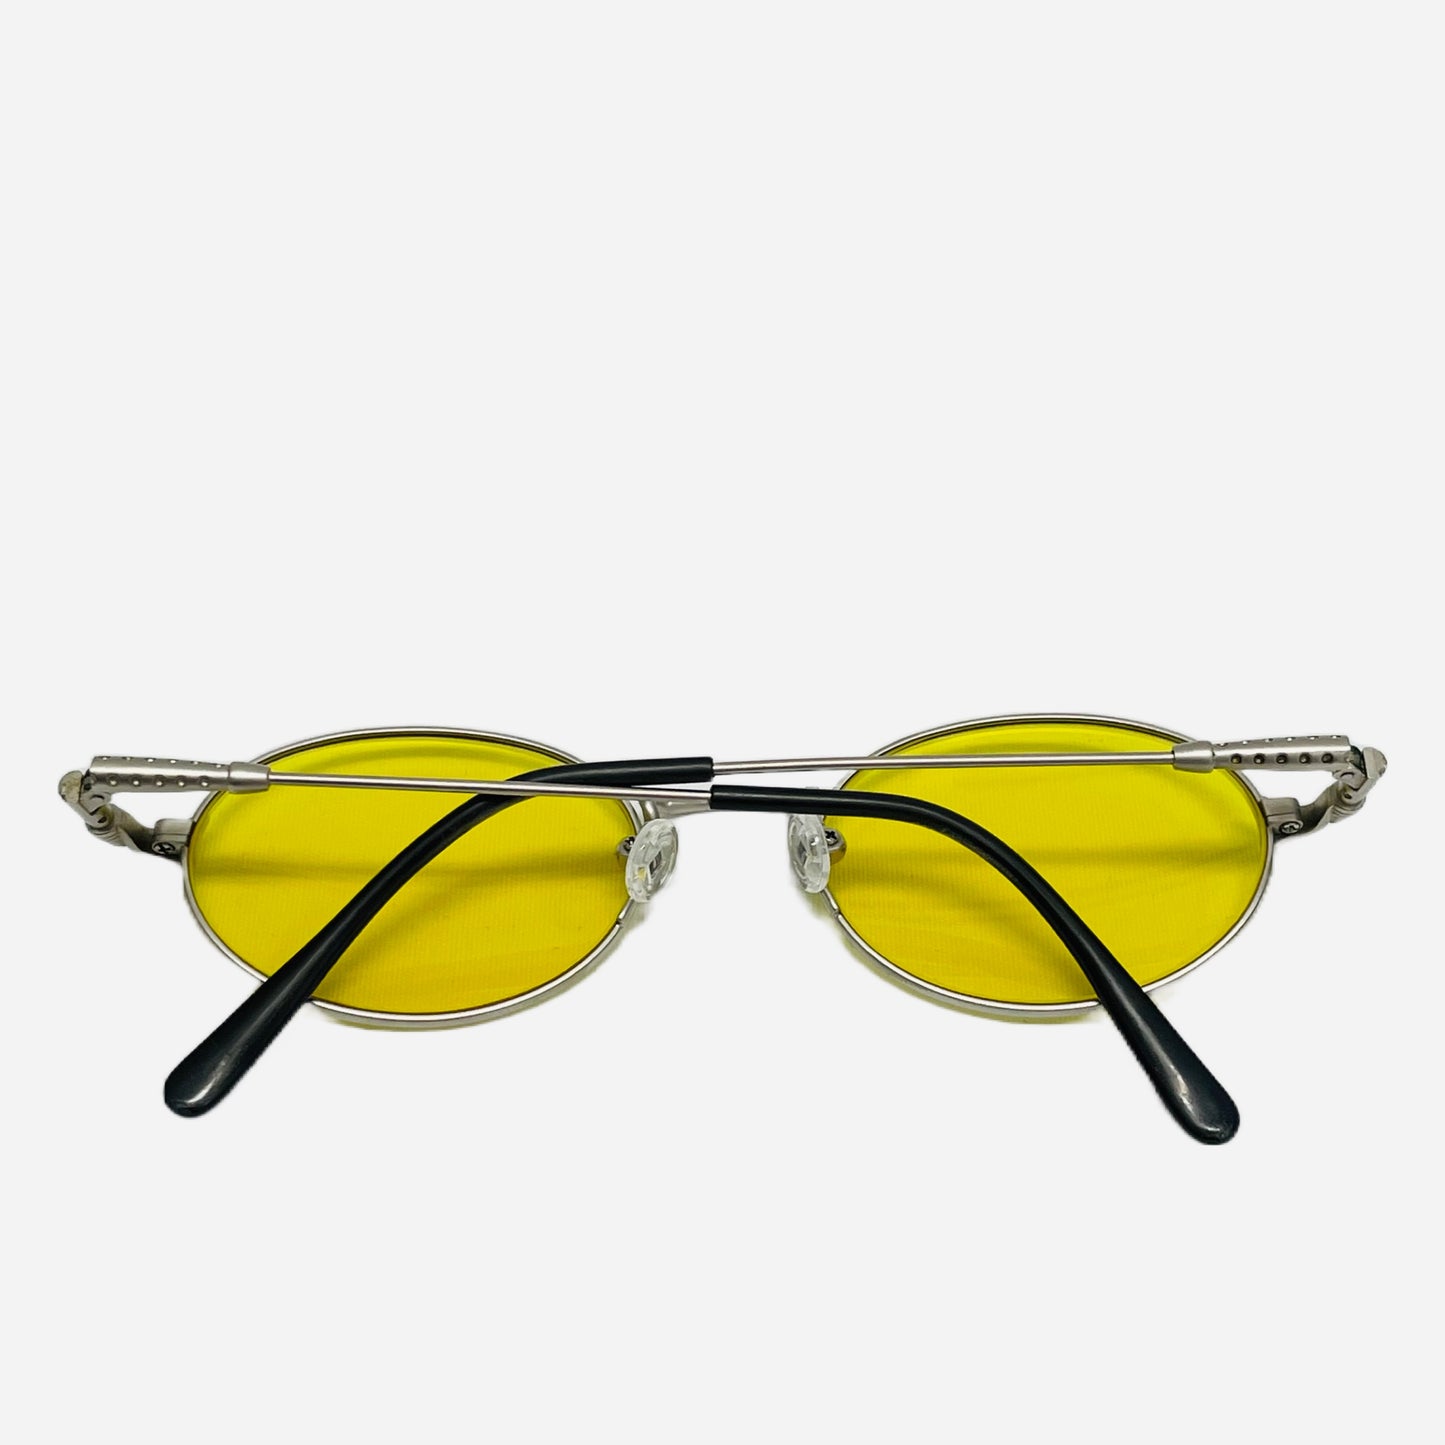 Vintage-Jean-Paul-Gaultier-Sonnenbrille-Sunglasses-Model-55-6108-made-in-japan-the-seekers-back